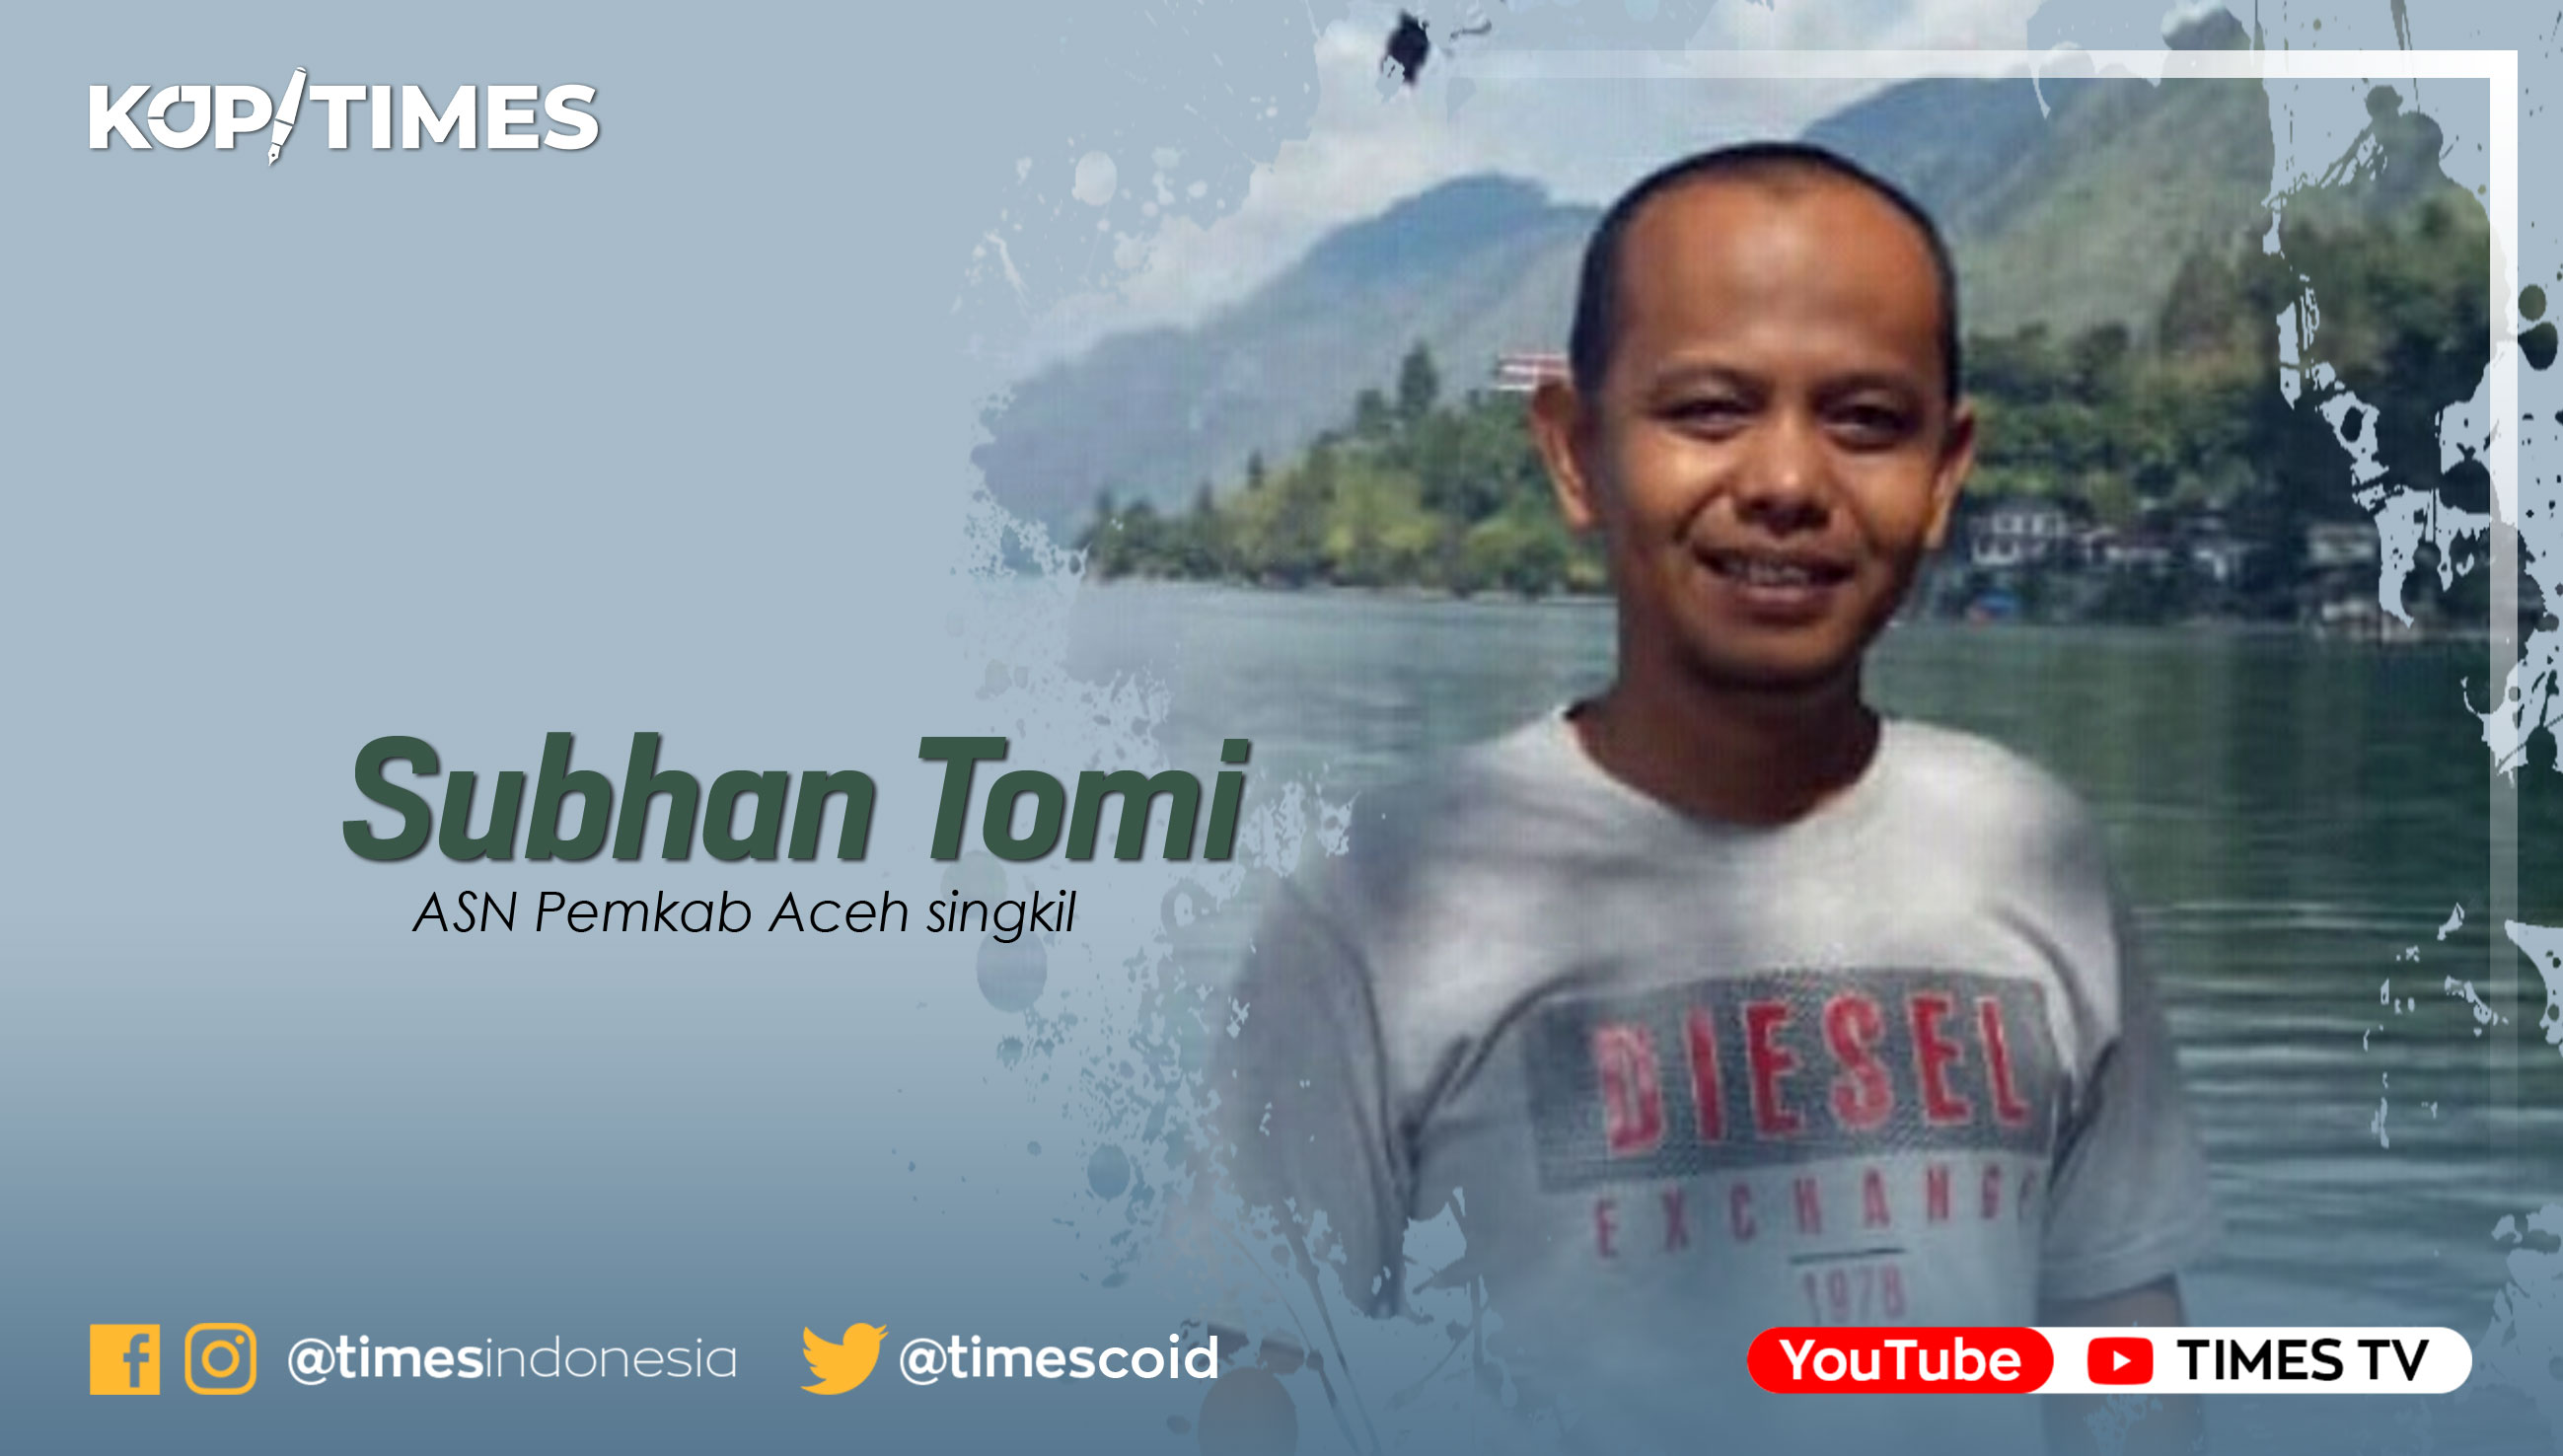 Subhan Tomi: ASN Pemkab Aceh singkil.